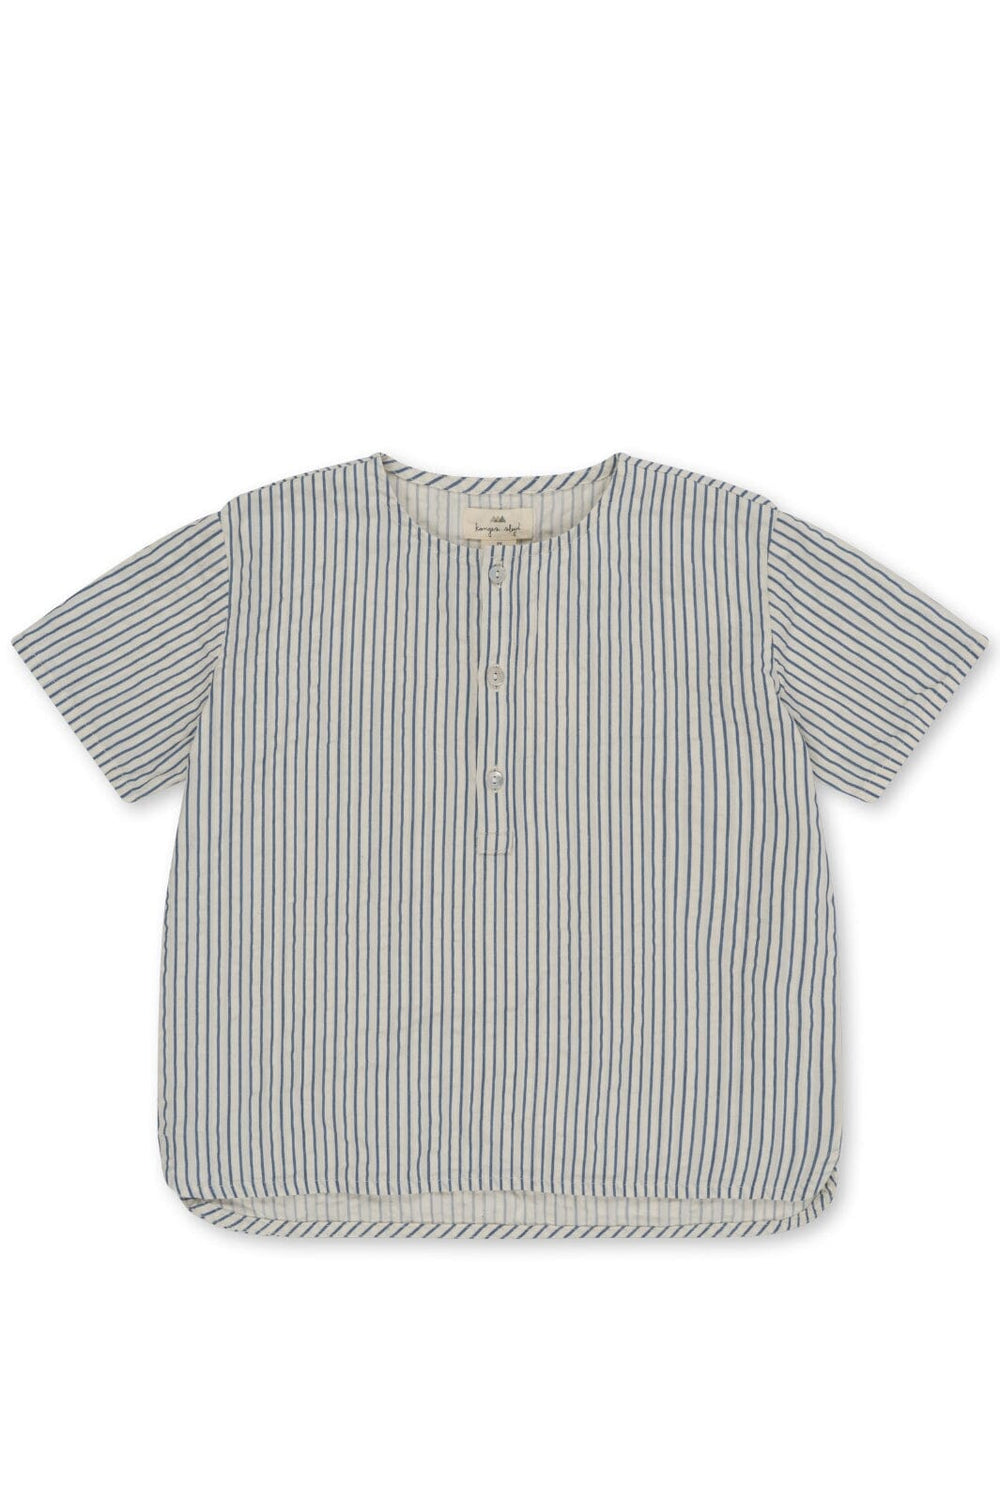 Konges Sløjd - Ace Ss Shirt Gots - Stripe Bluie Skjorter 